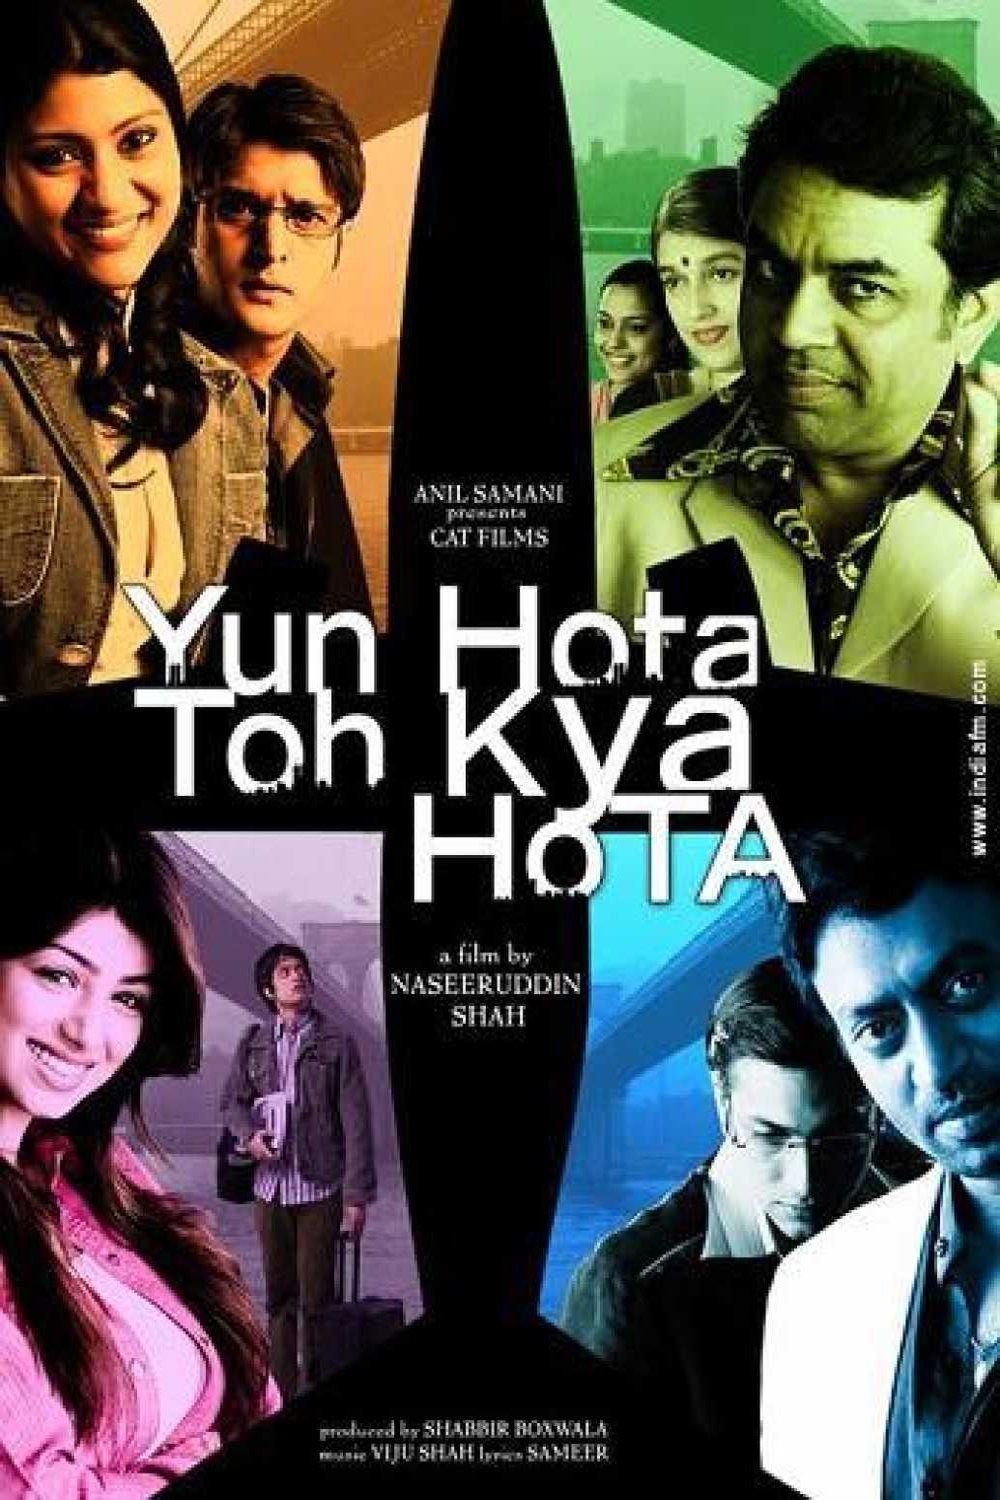 Hindi poster of the movie Yun Hota To Kya Hota